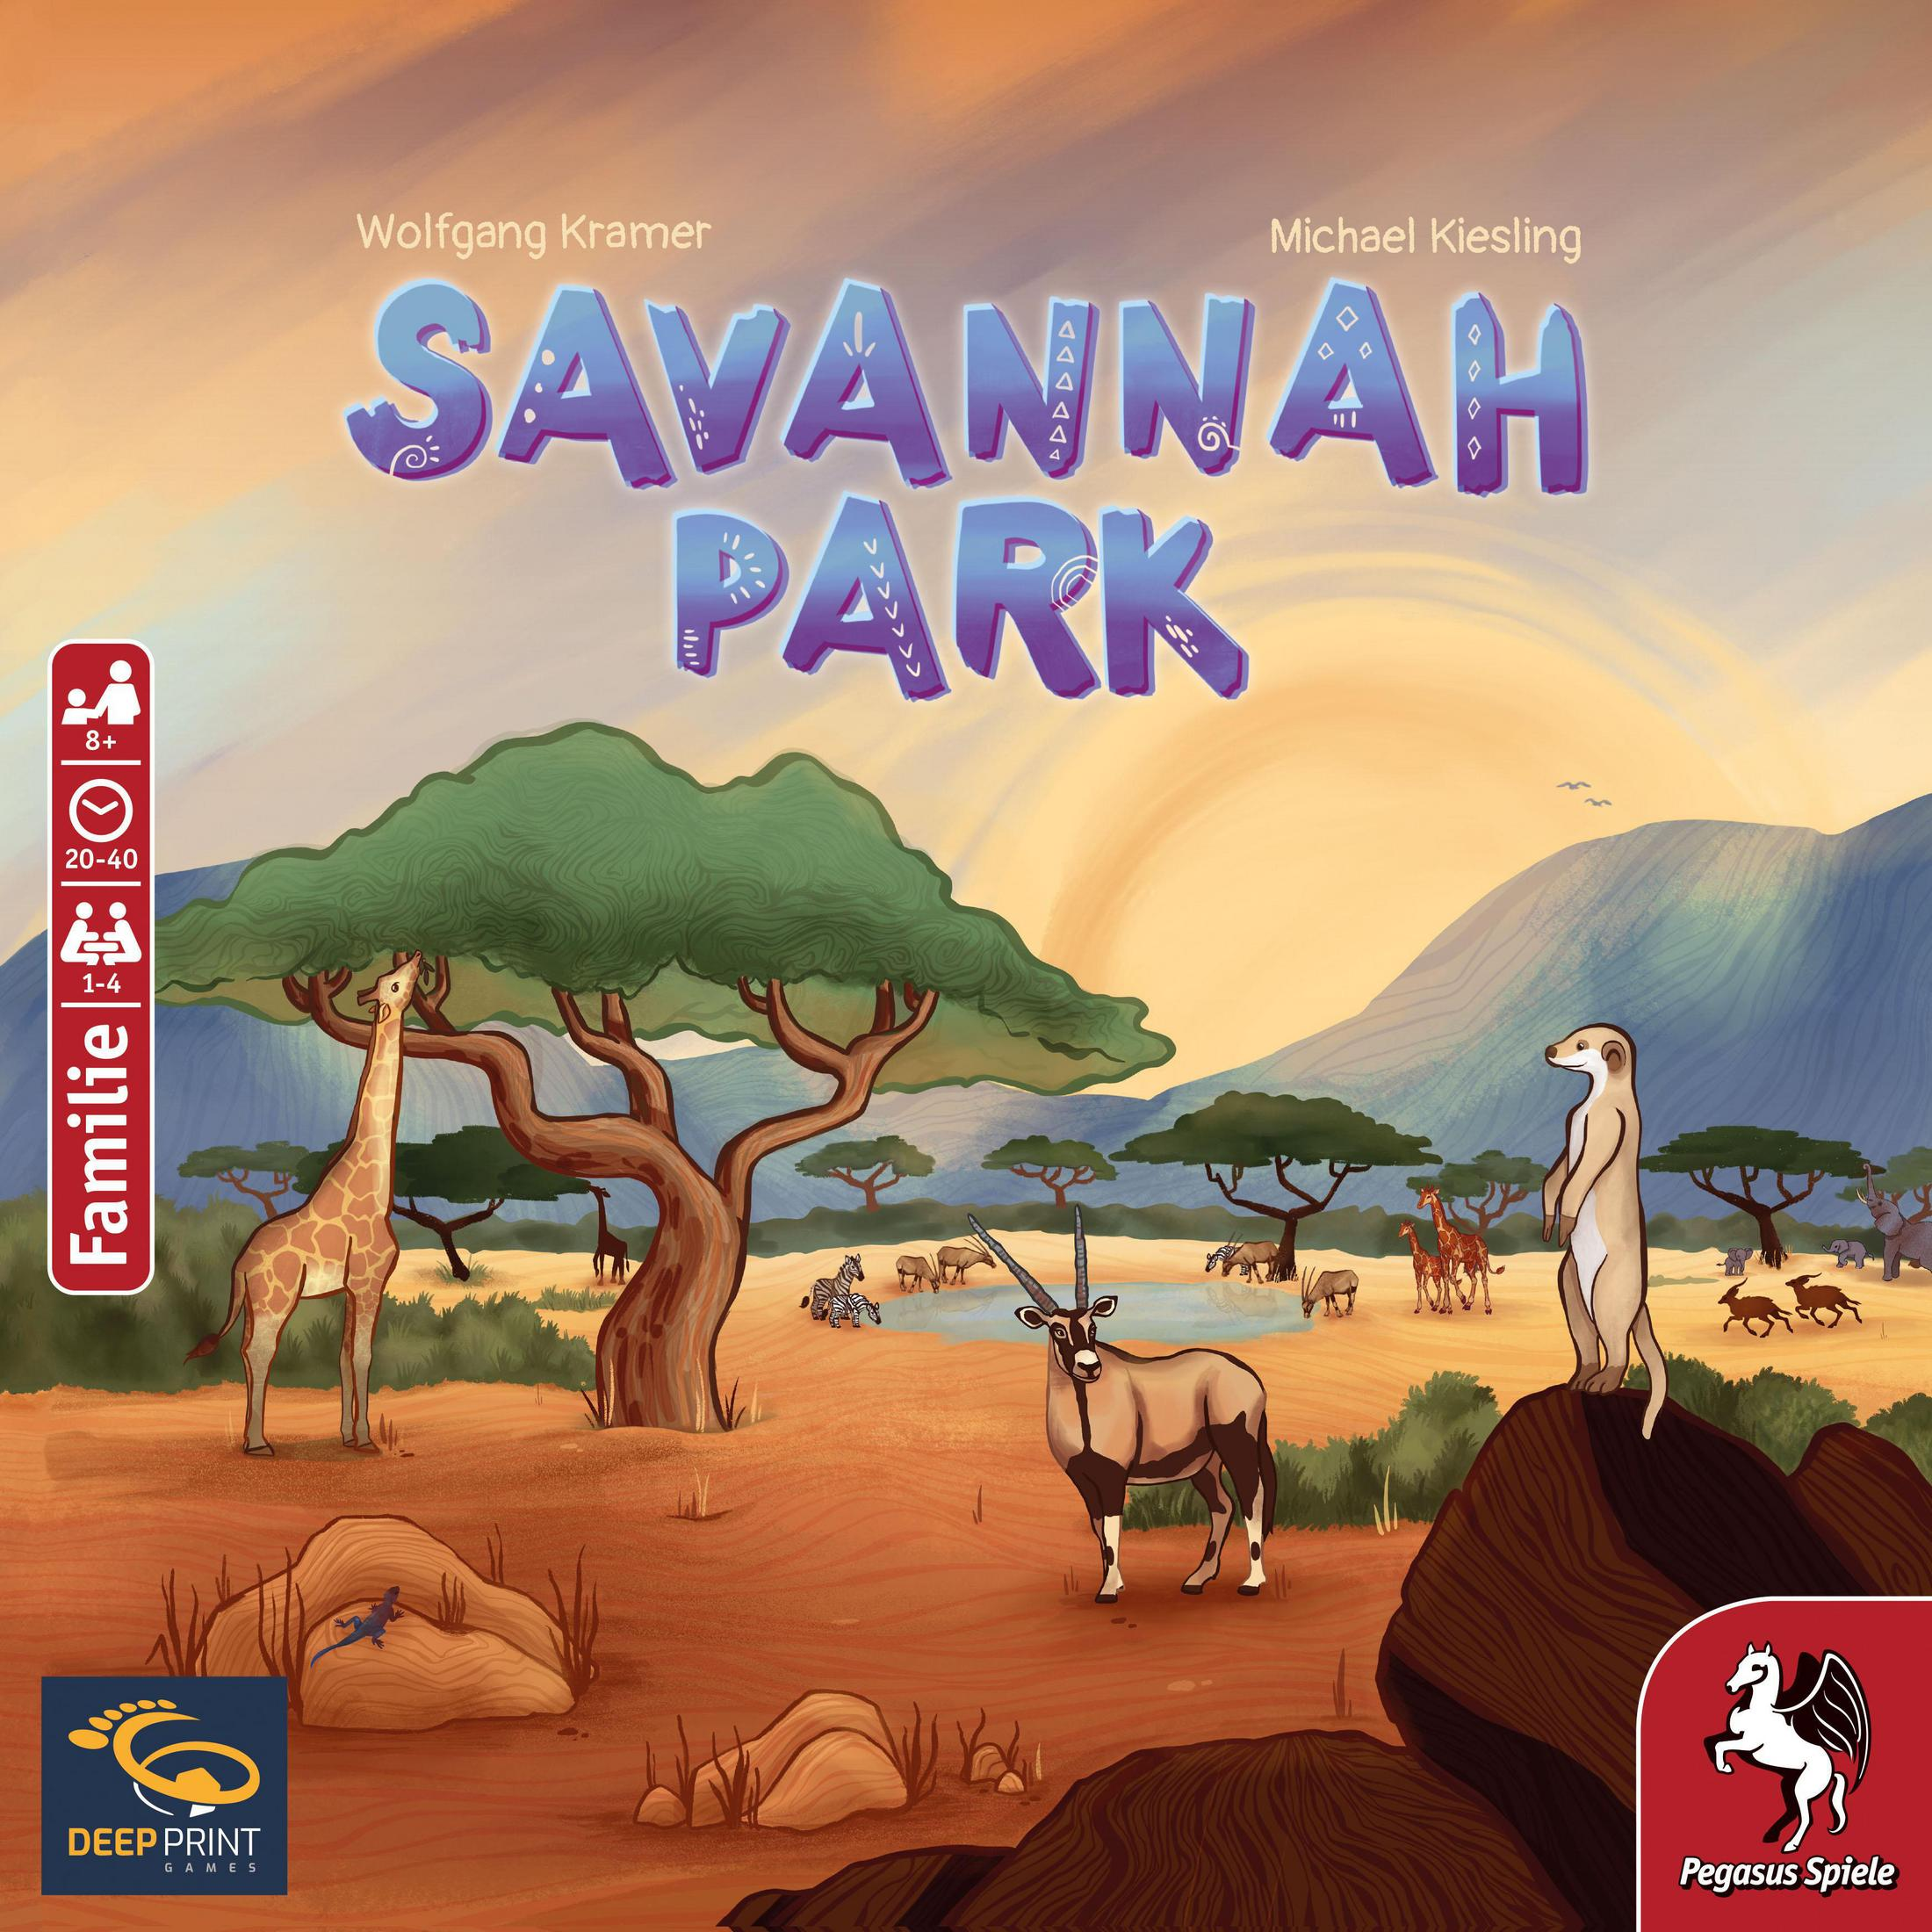 SAVANNAH Familenspiel PARK PEGASUS 57804G